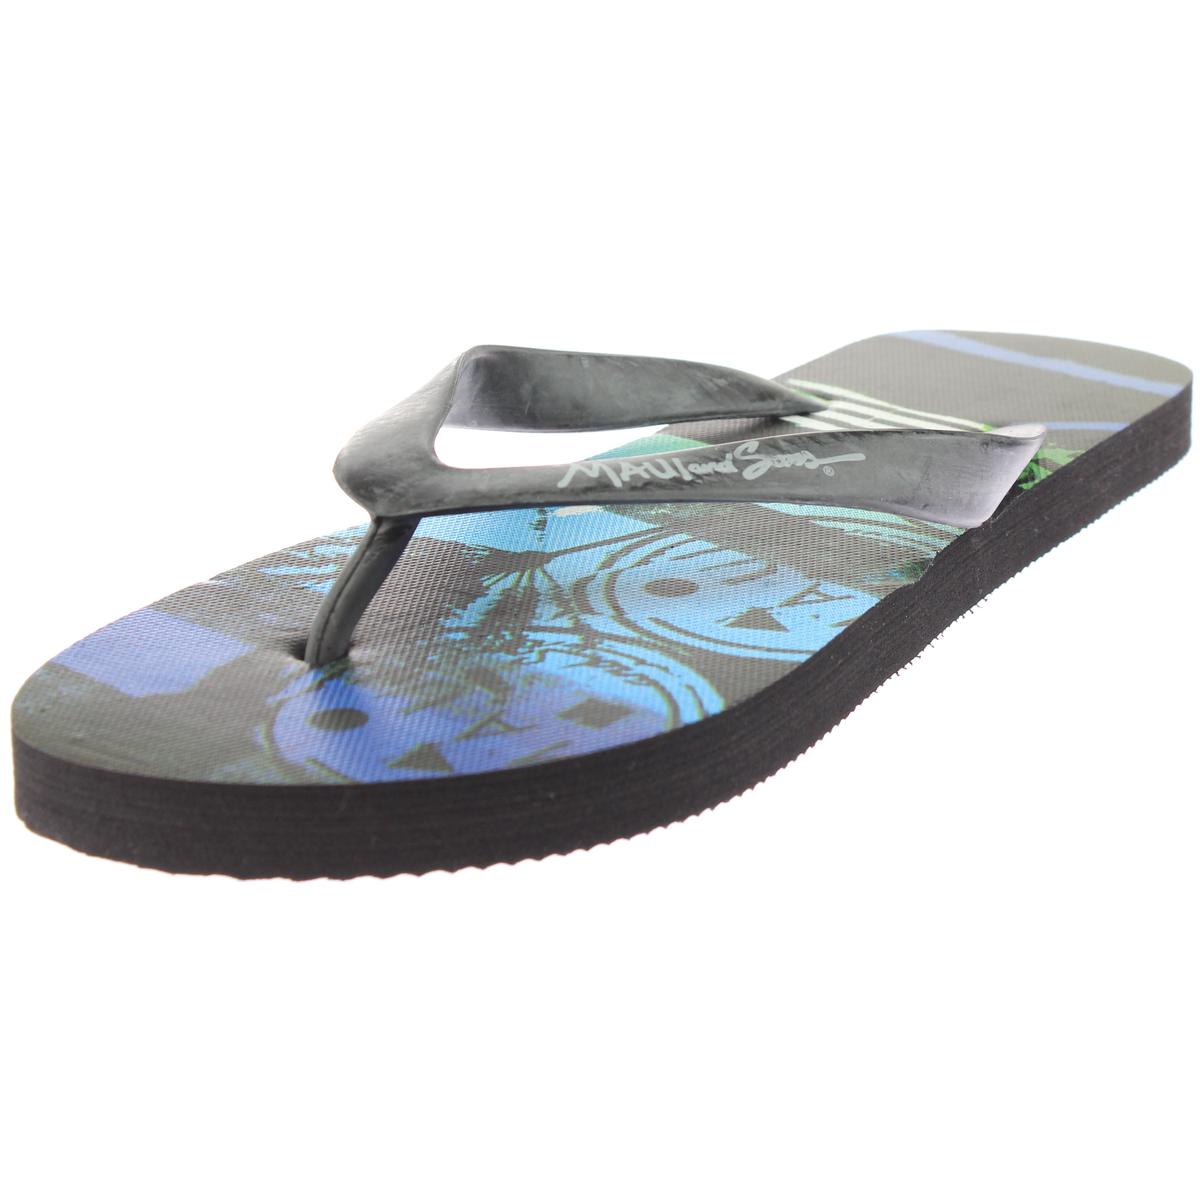 Maui and Sons 6946 Mens Graphic Slide FlipFlops Sandals